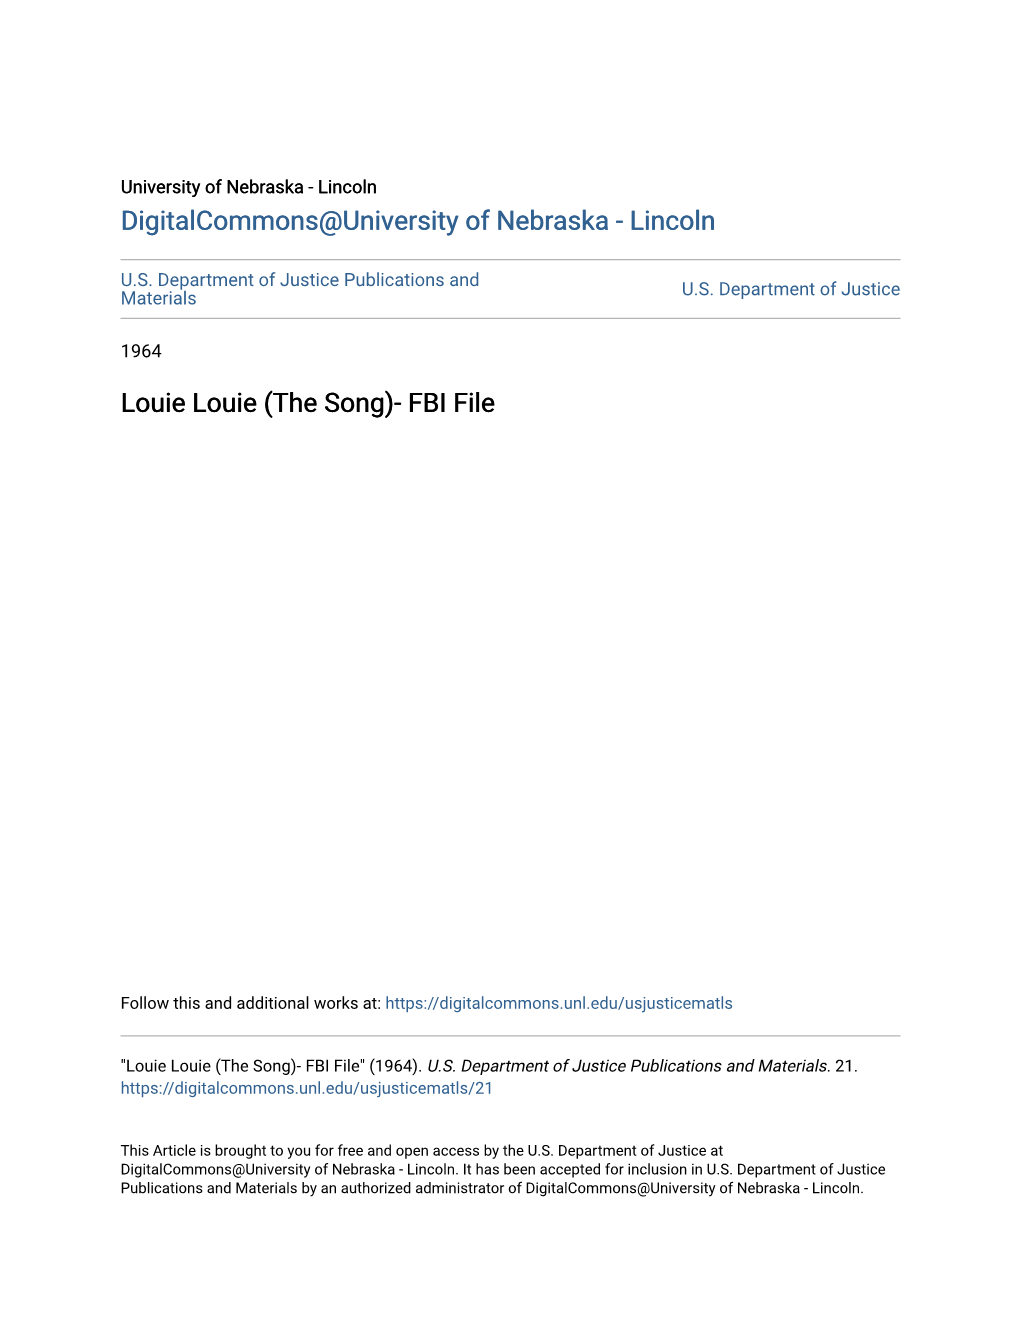 Louie Louie (The Song)- FBI File